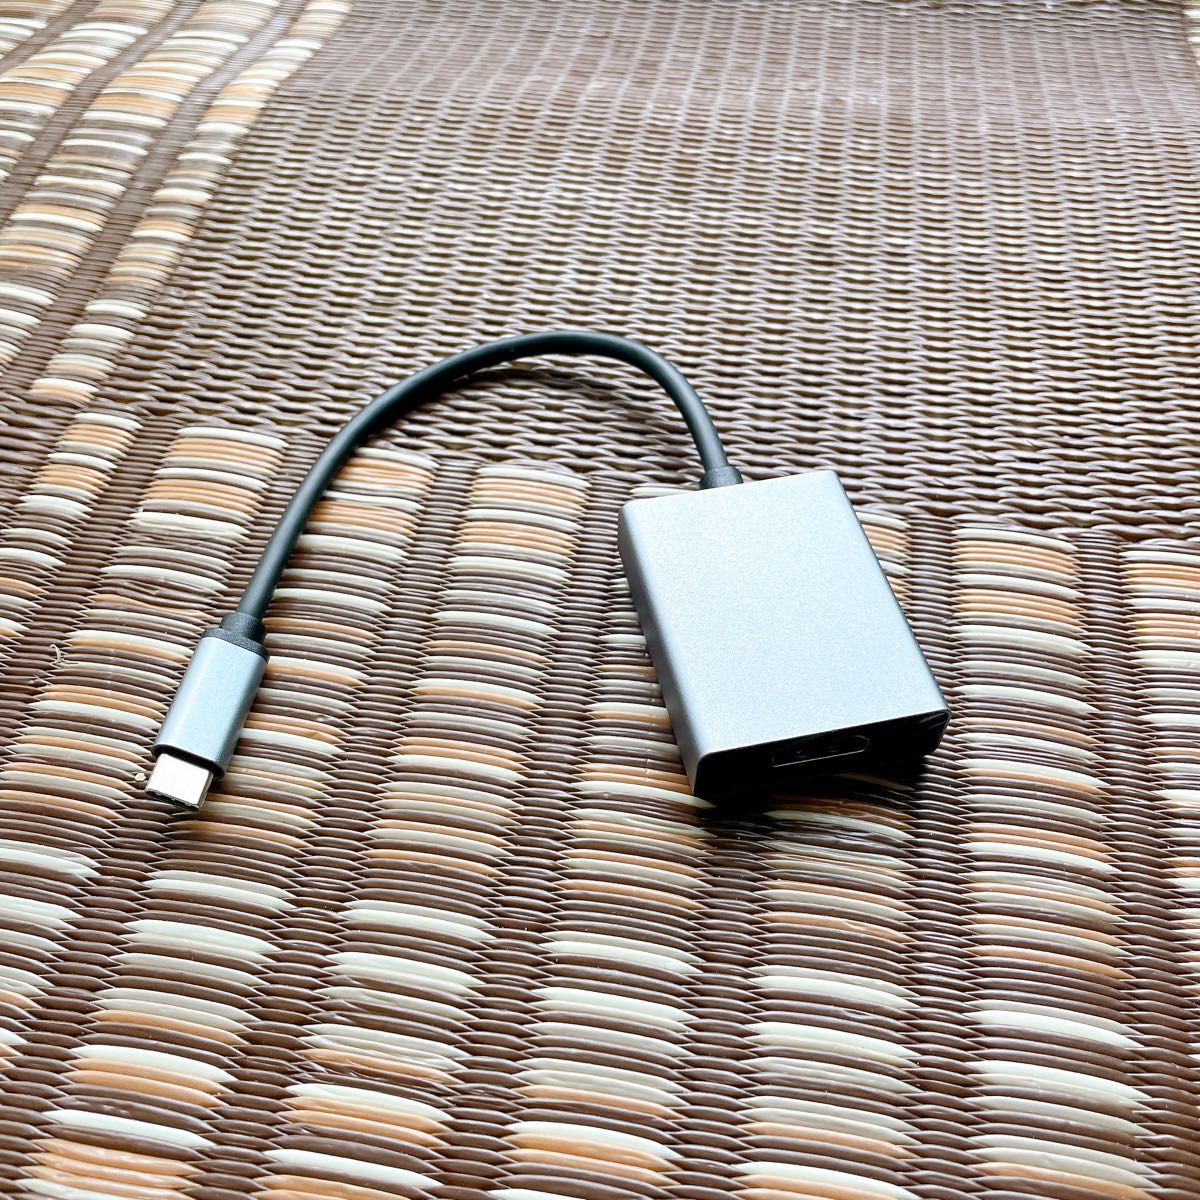 USB Type C to HDMI 変換アダプタ 4K@30Hz 変換ケーブル